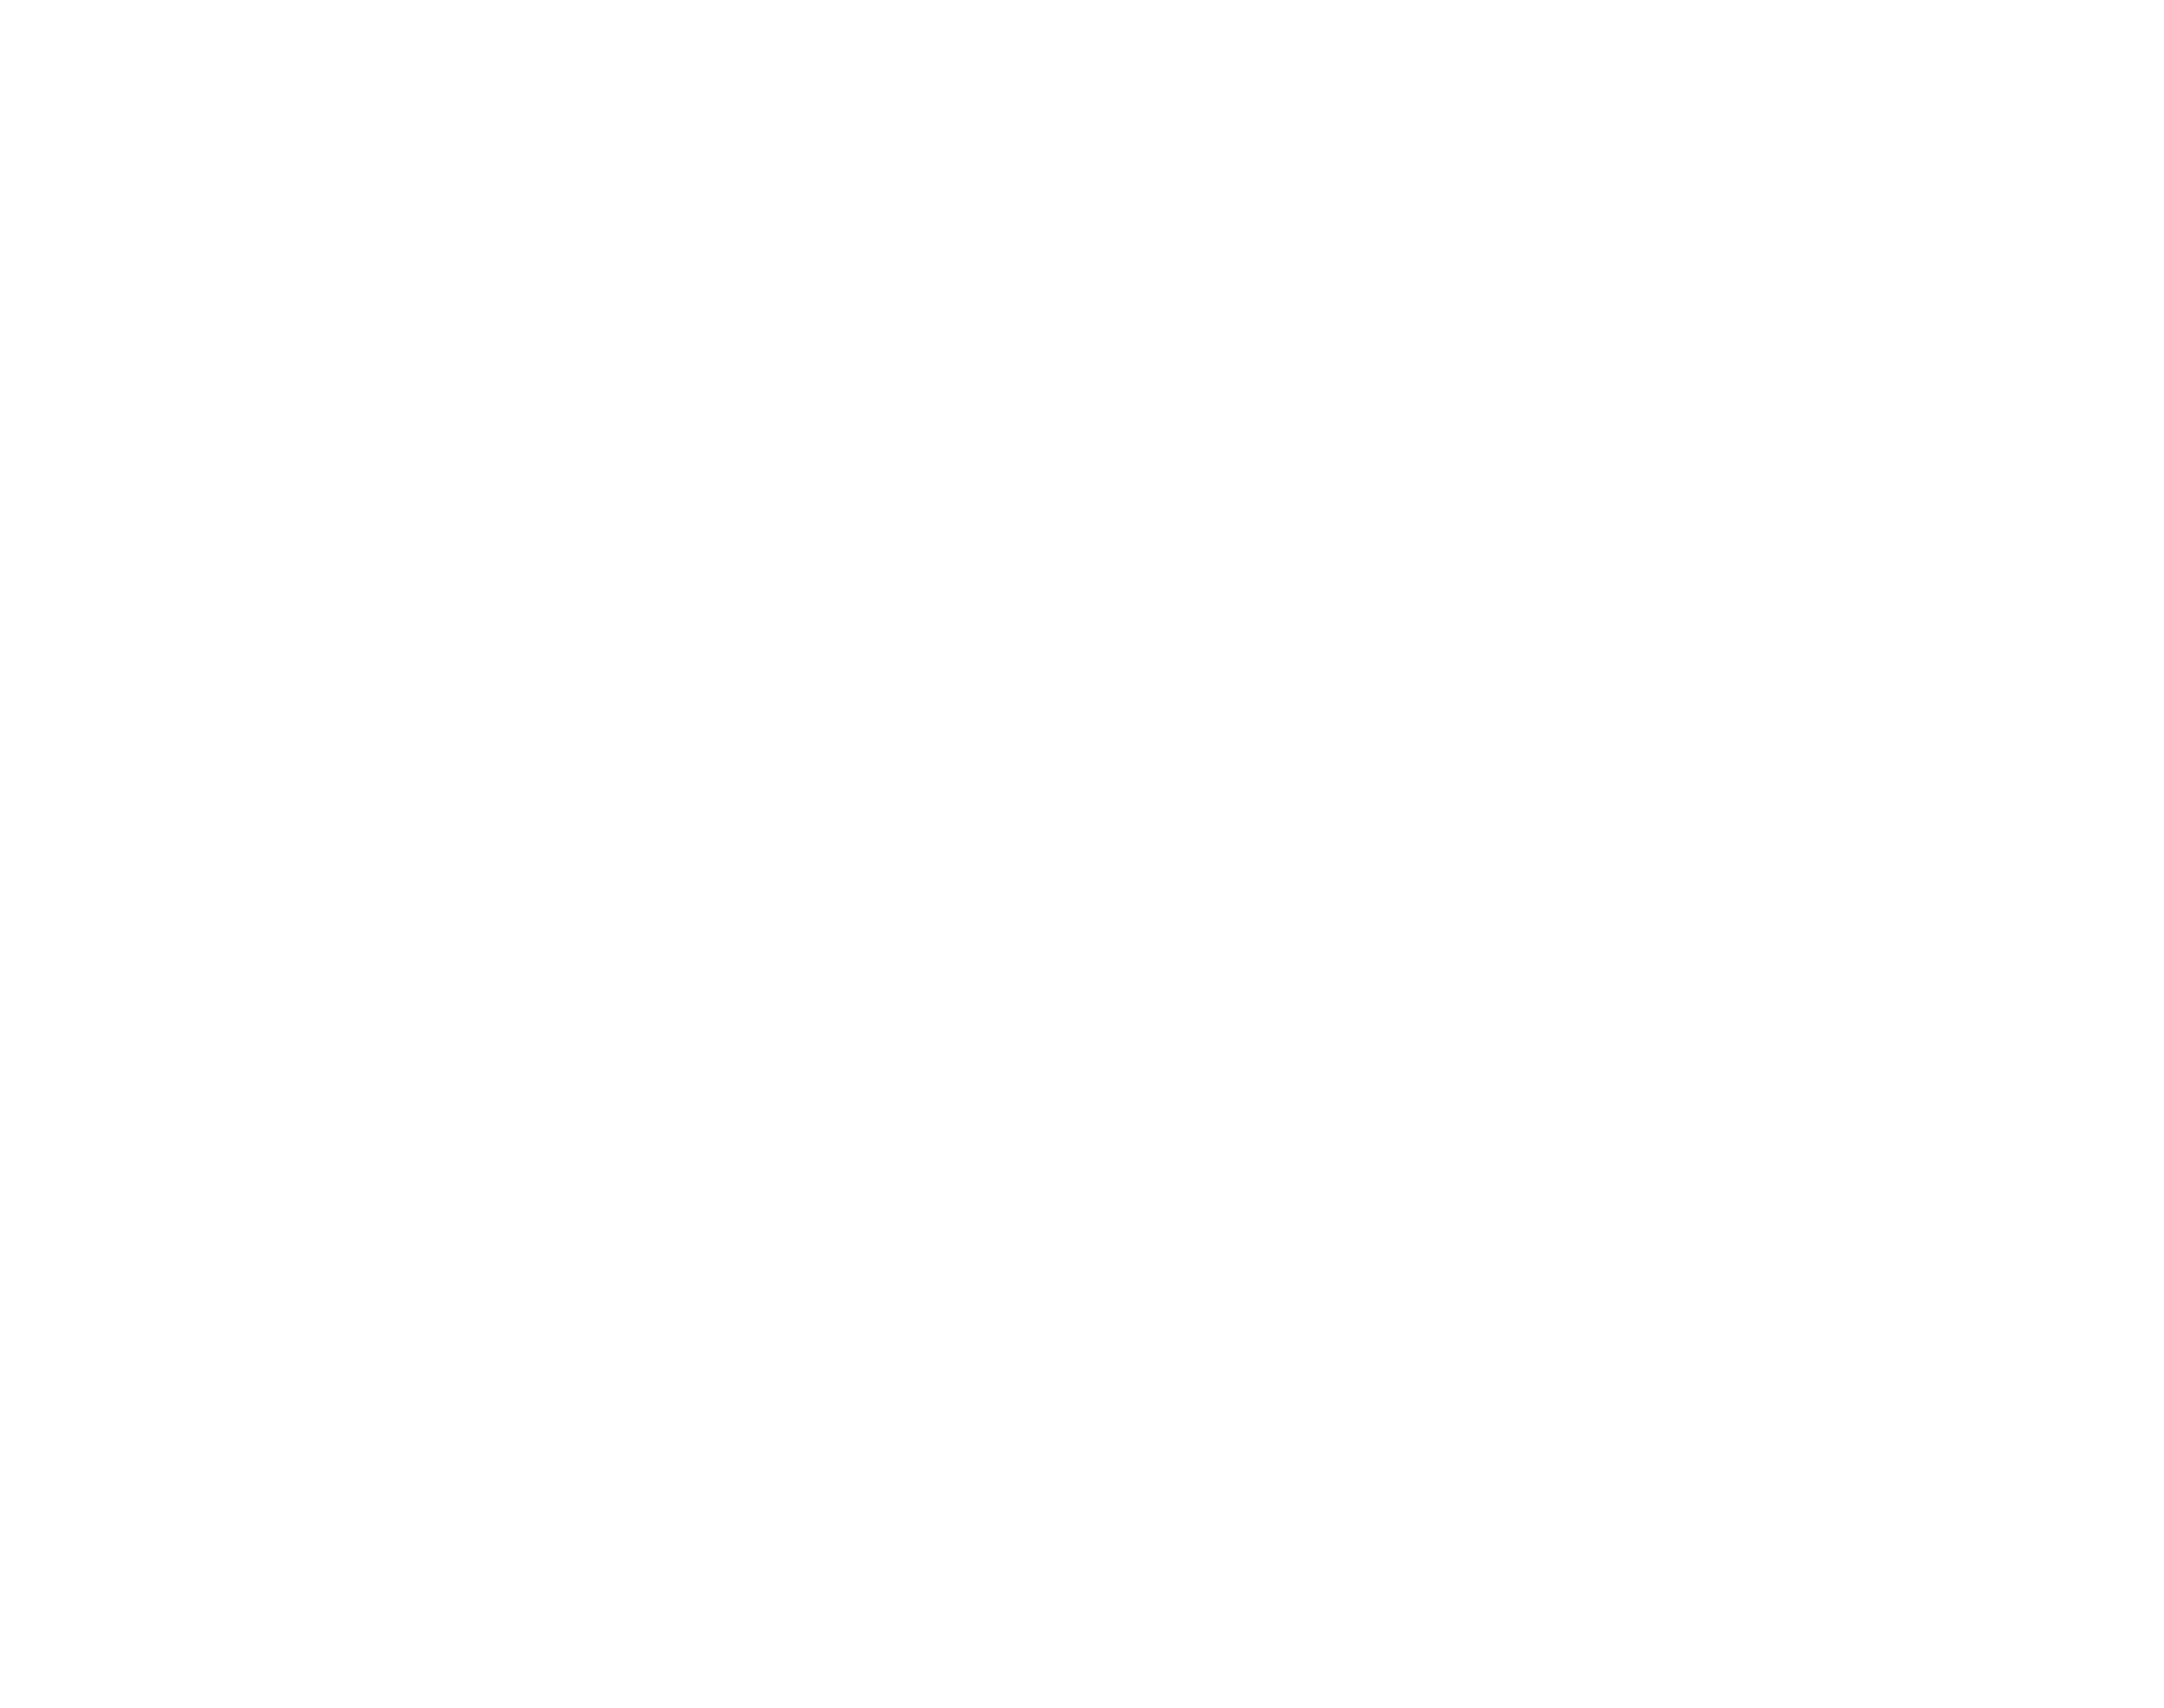 Soundwise Media